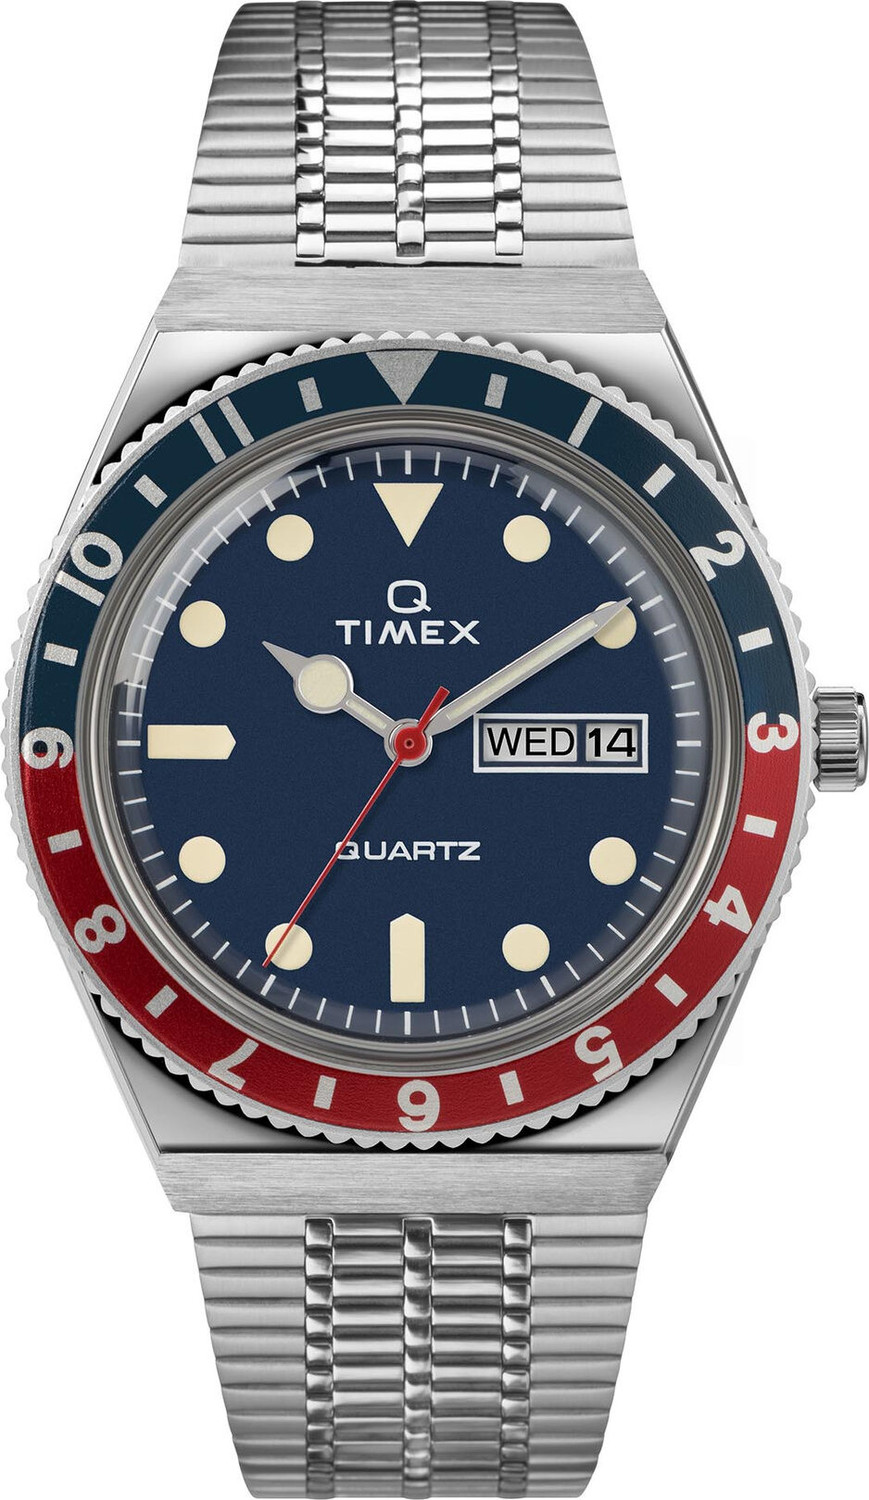 Hodinky Timex Q Reissue TW2T80700 Silver/Navy